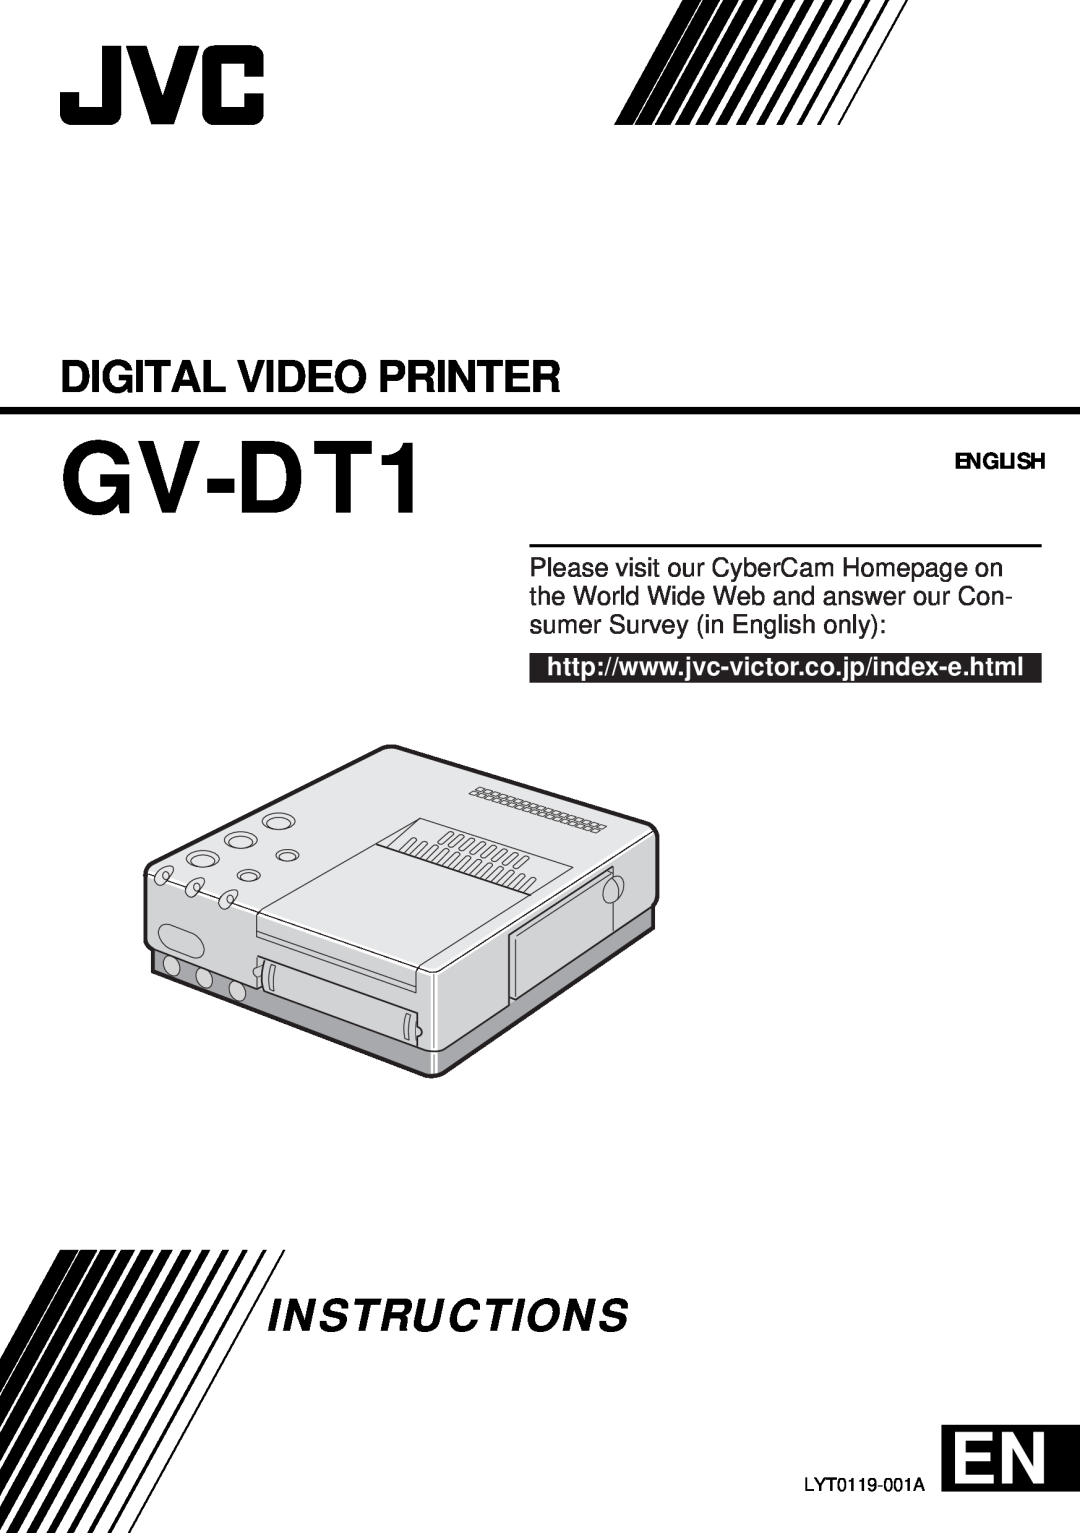 JVC 0298MNV*SW*VP manual GV-DT1, Digital Video Printer, Instructions, English, LYT0119-001A EN 